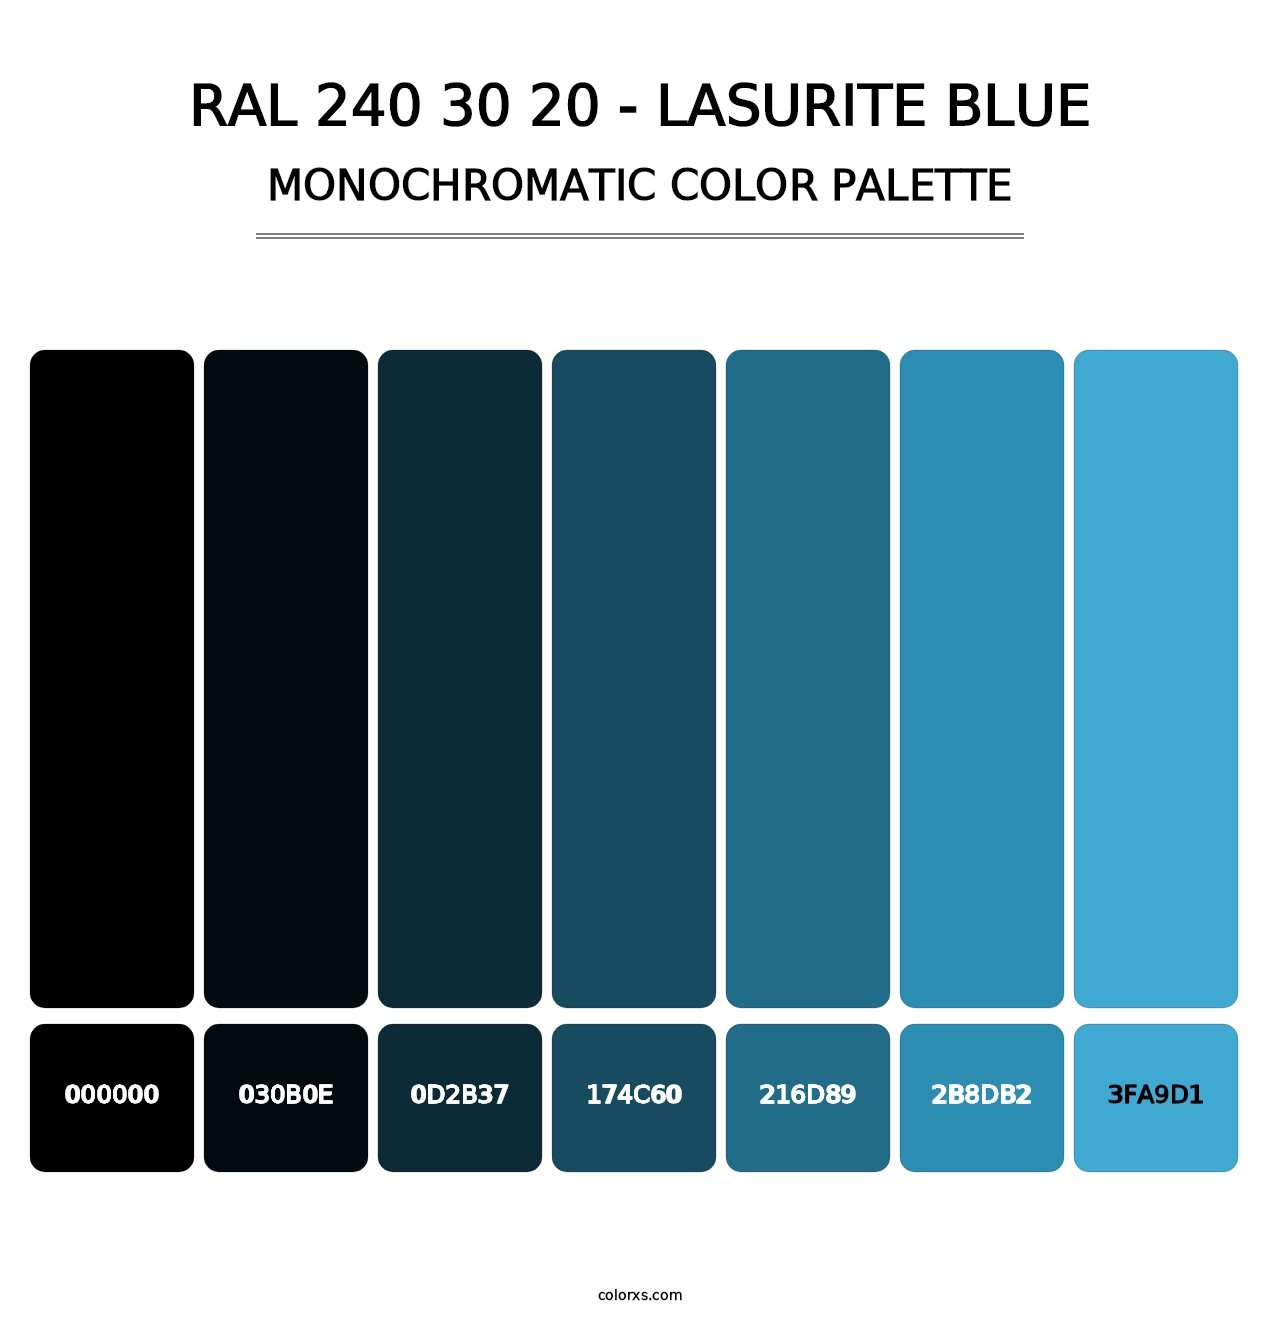 RAL 240 30 20 - Lasurite Blue - Monochromatic Color Palette